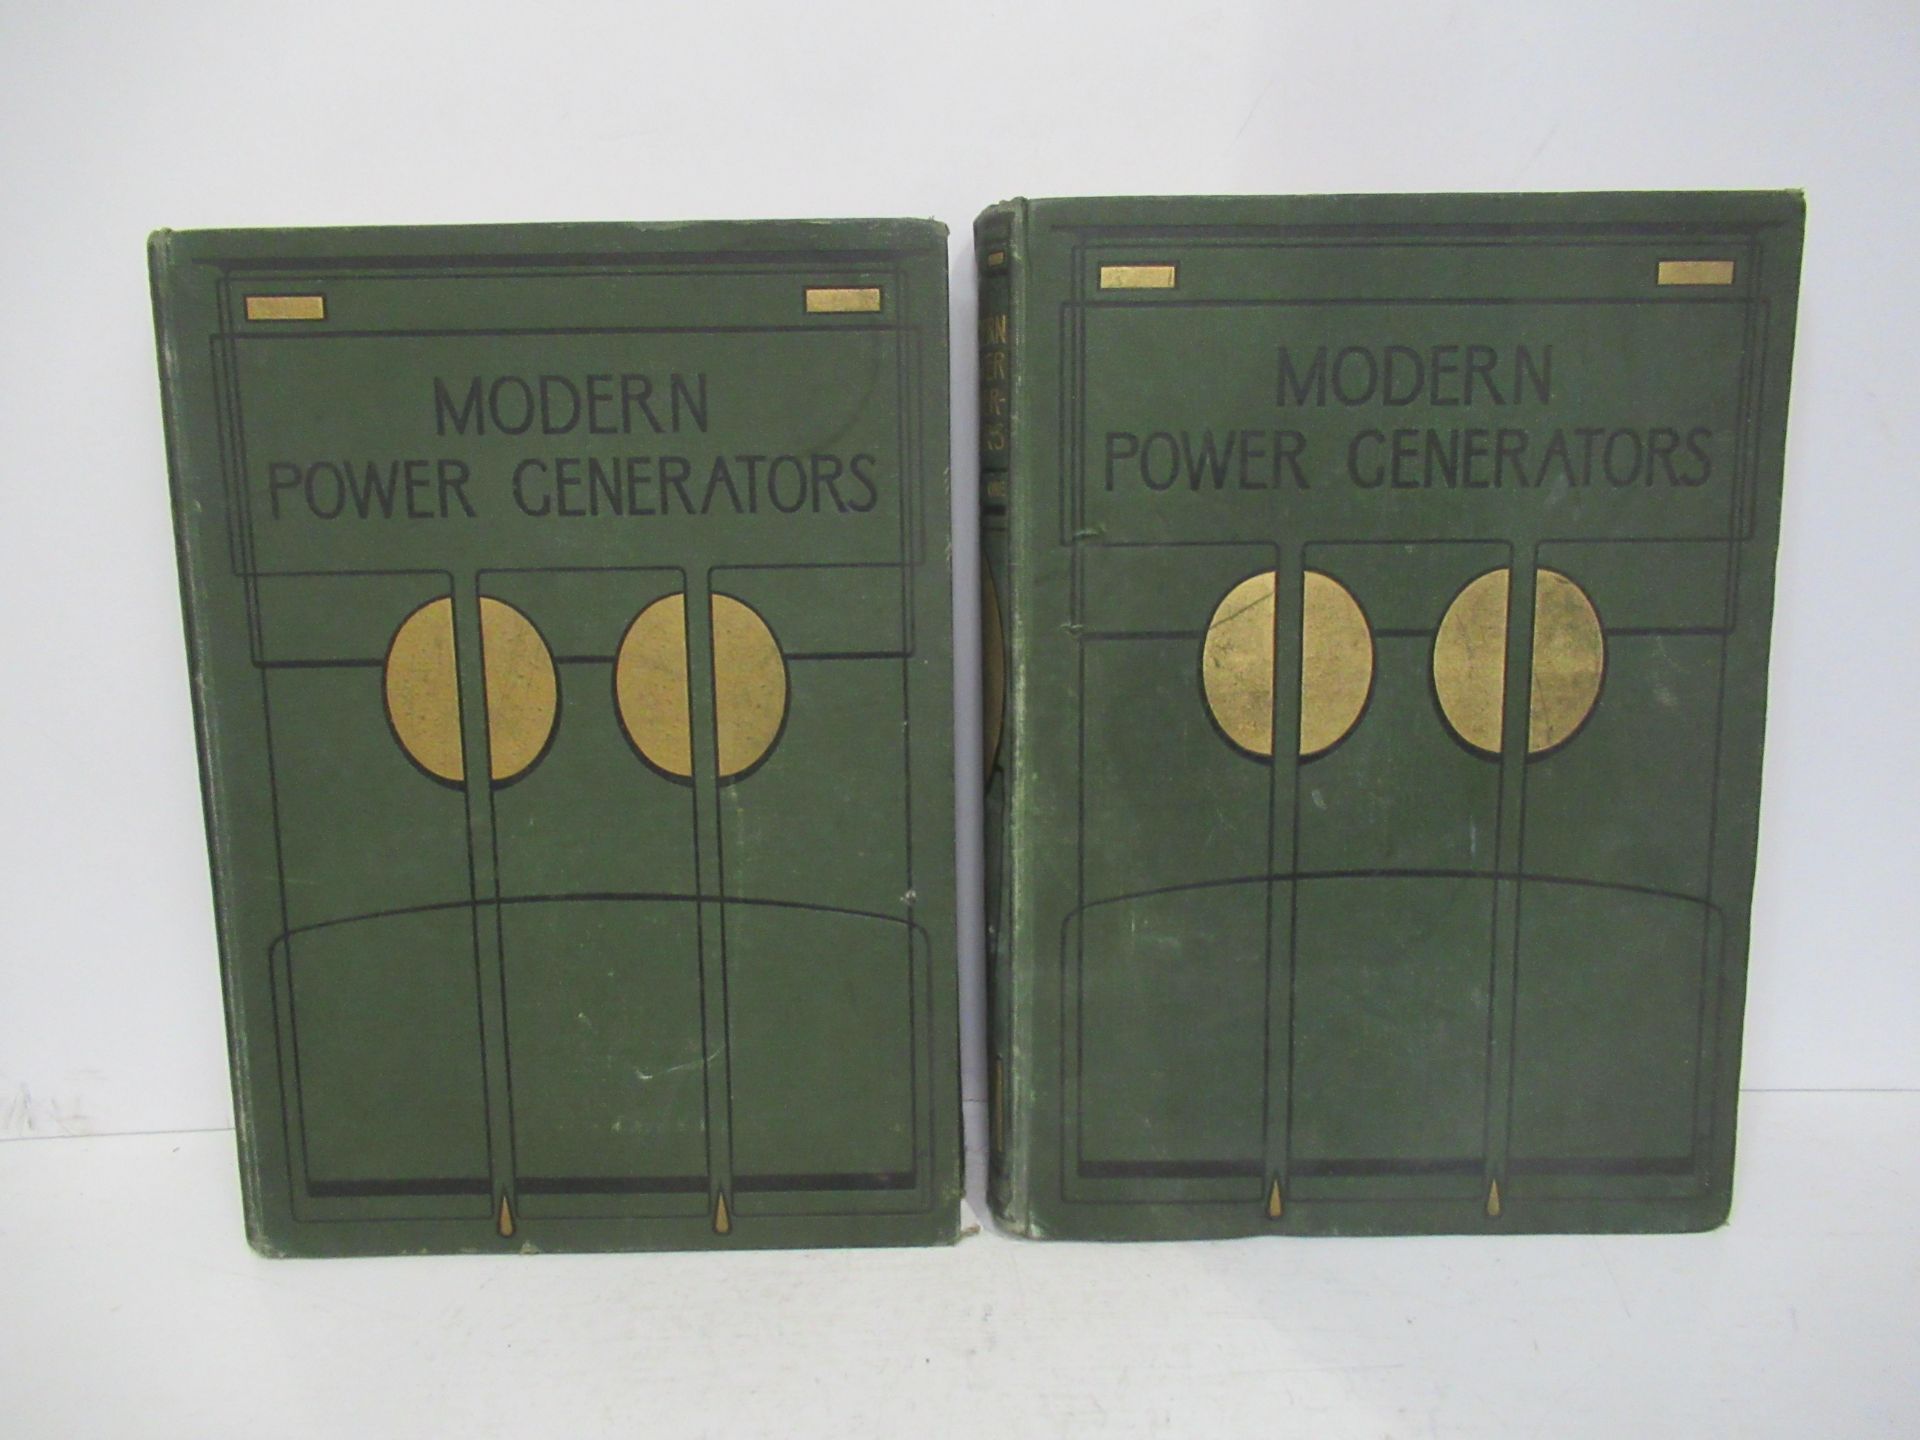 Volumes 1 and 2 of 'Modern Power Generators'